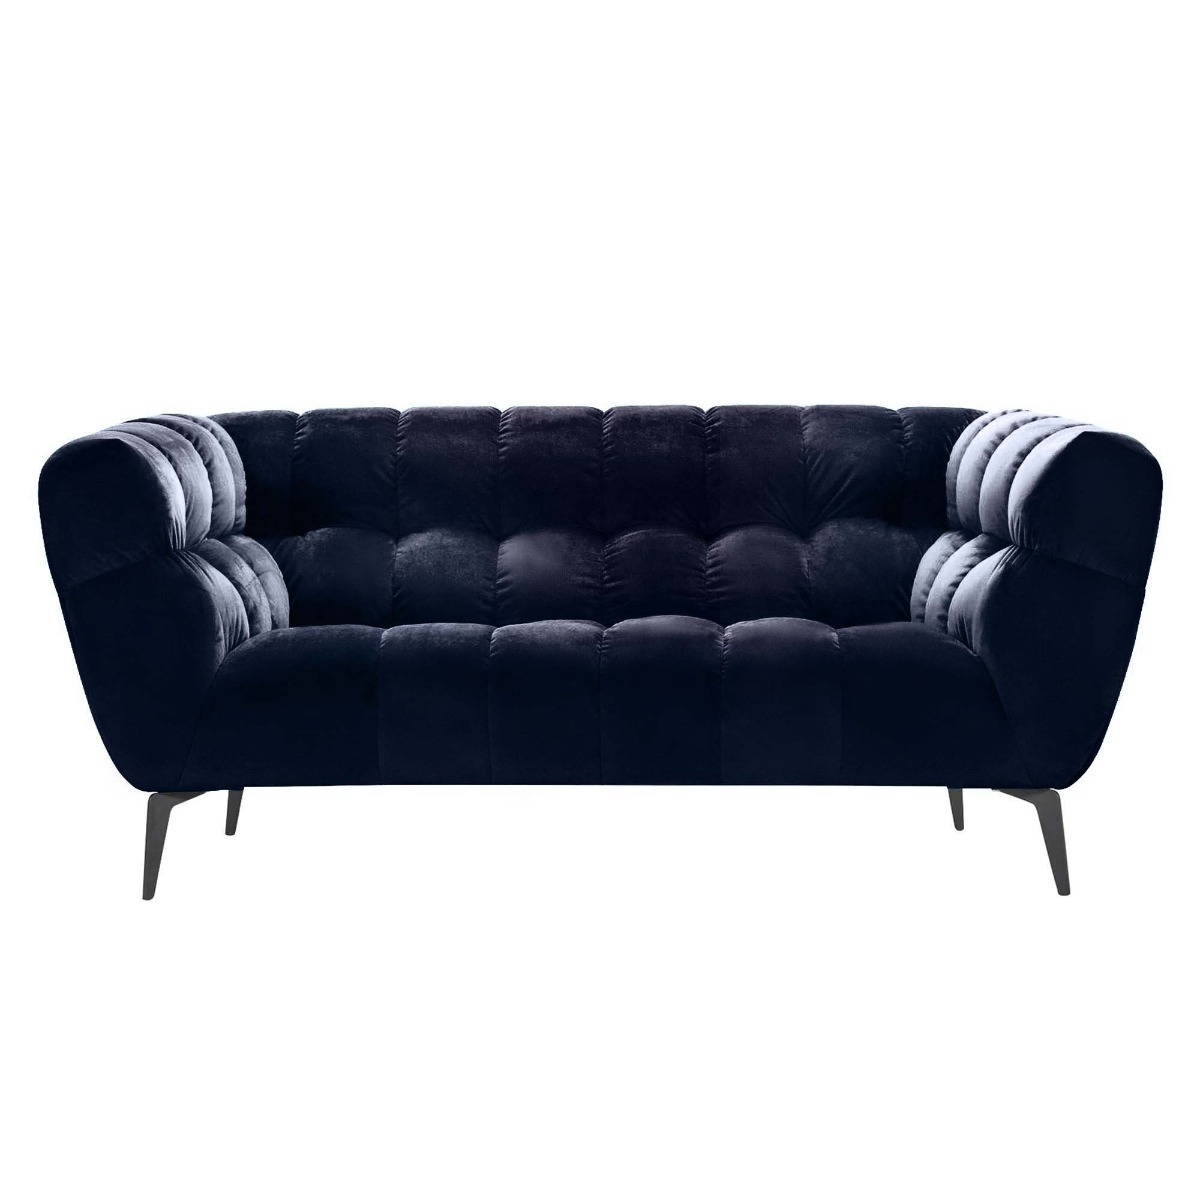 Azalea 2 Seater Sofa, Blue Fabric - Barker & Stonehouse - image 1